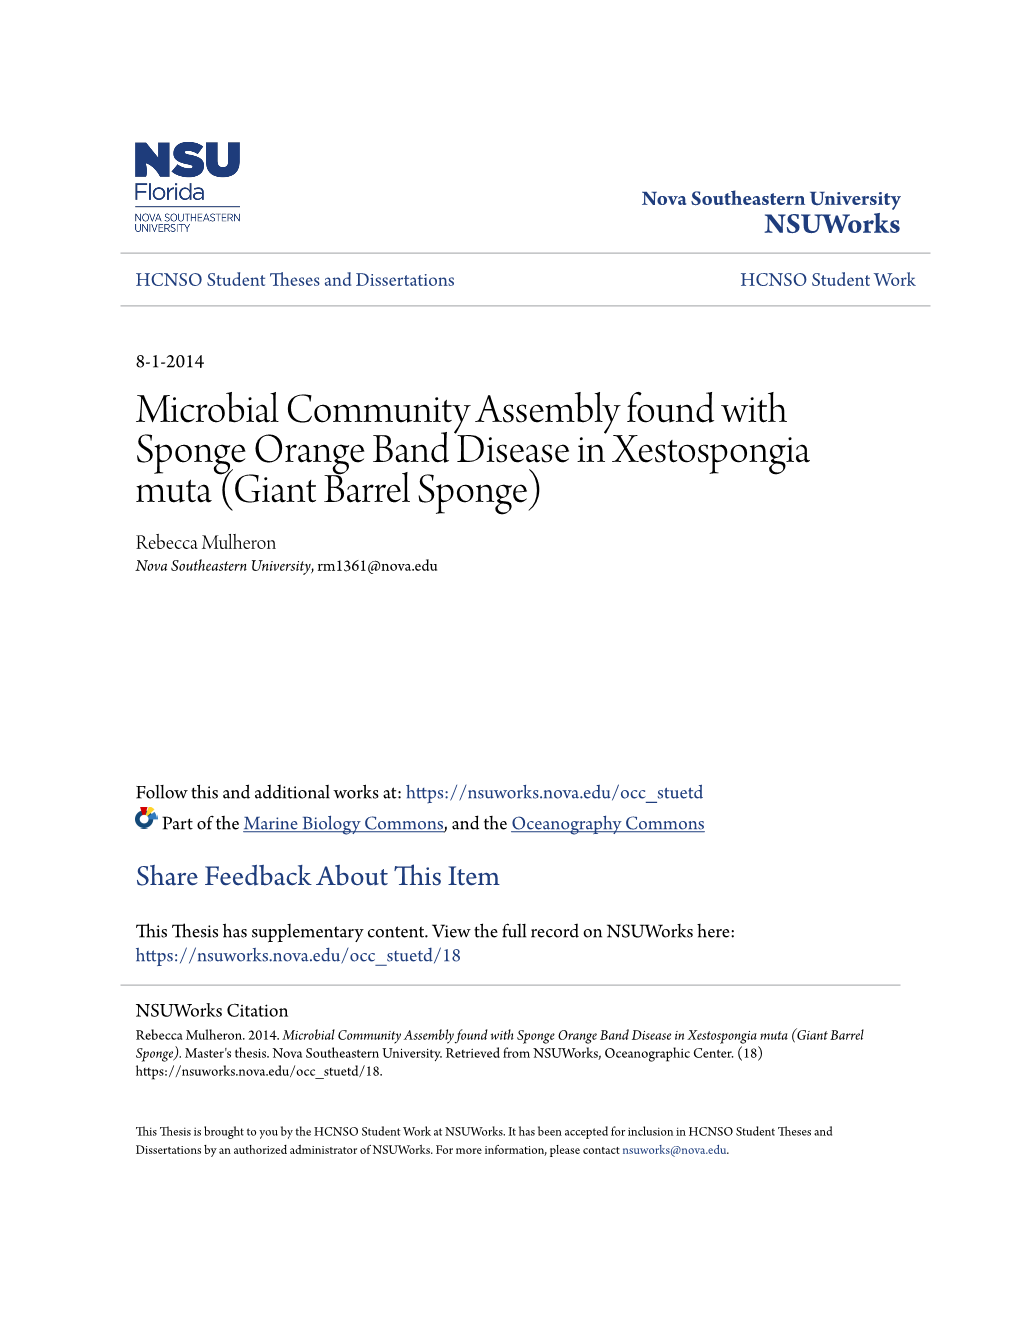 Microbial Community Assembly Found with Sponge Orange Band Disease in Xestospongia Muta (Giant Barrel Sponge)